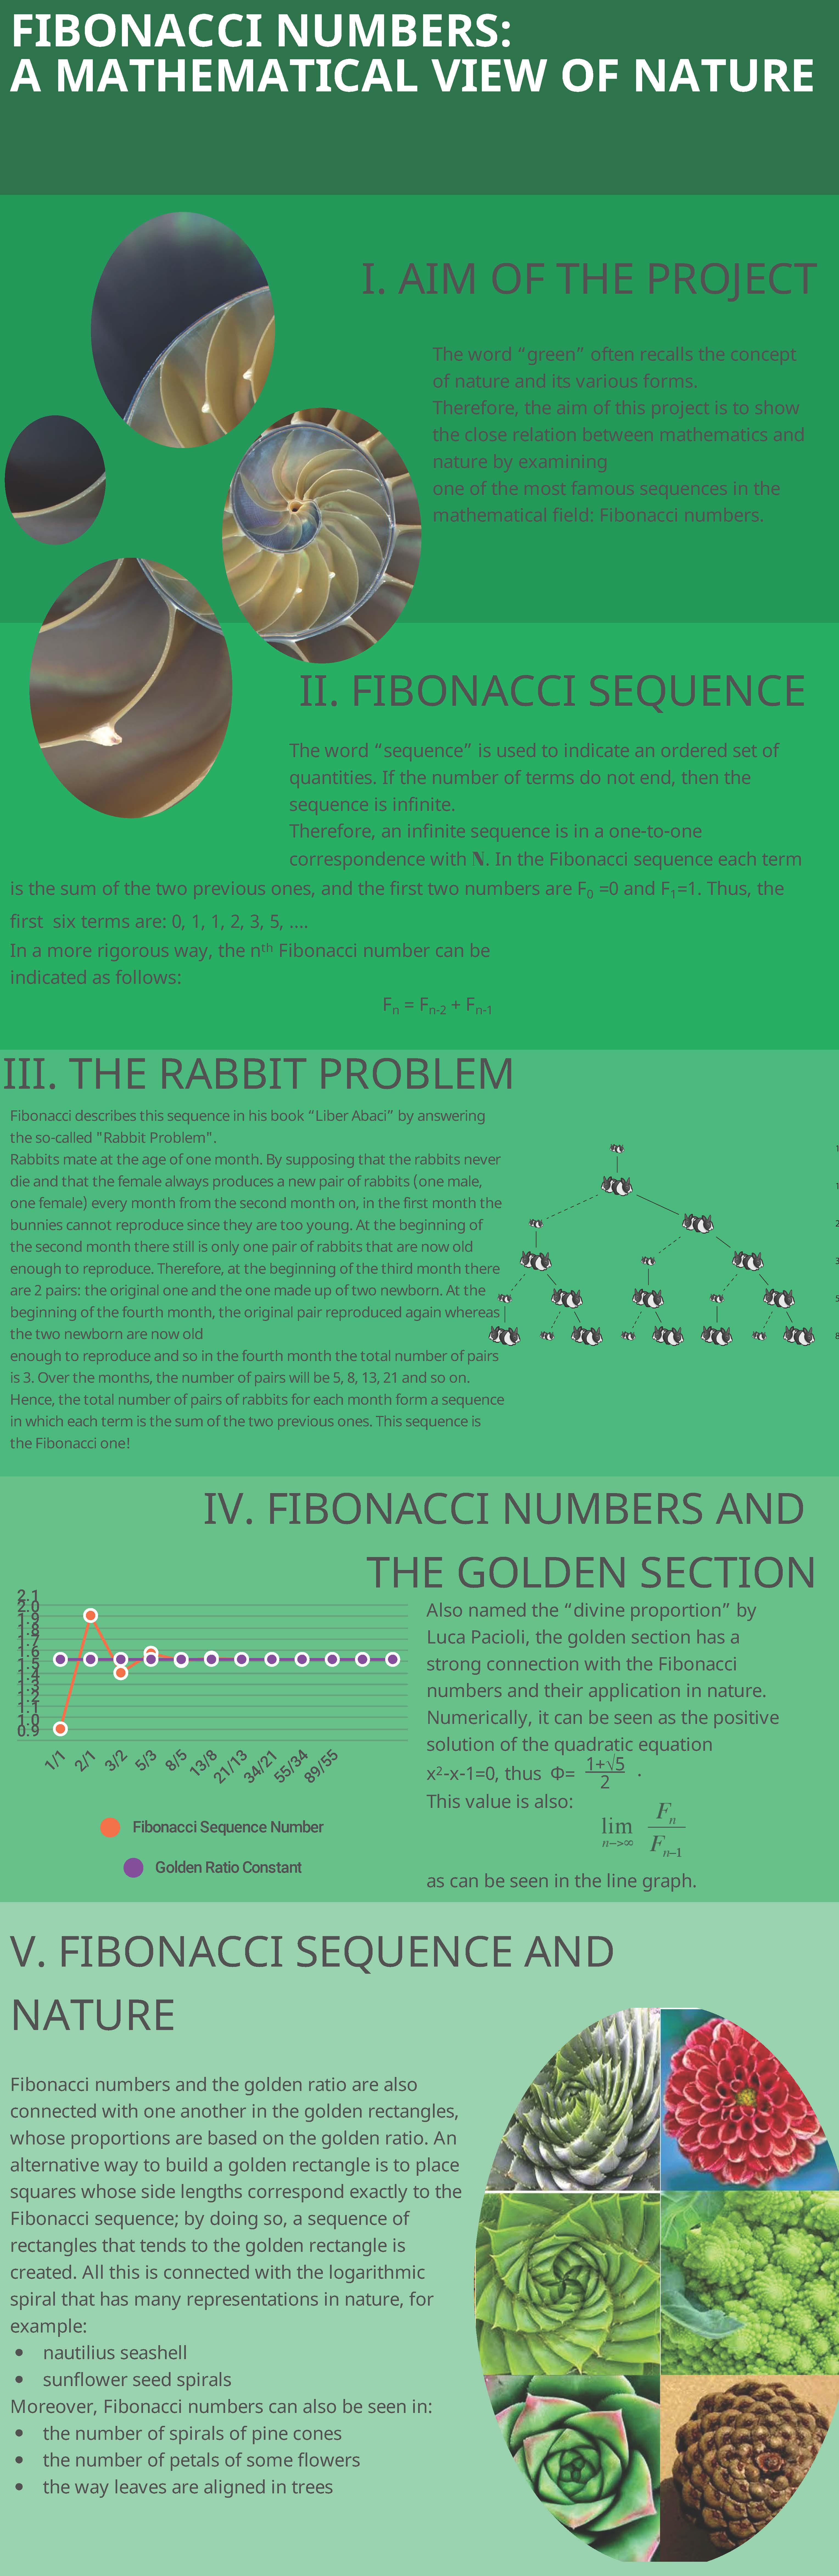 Fibonacci poster